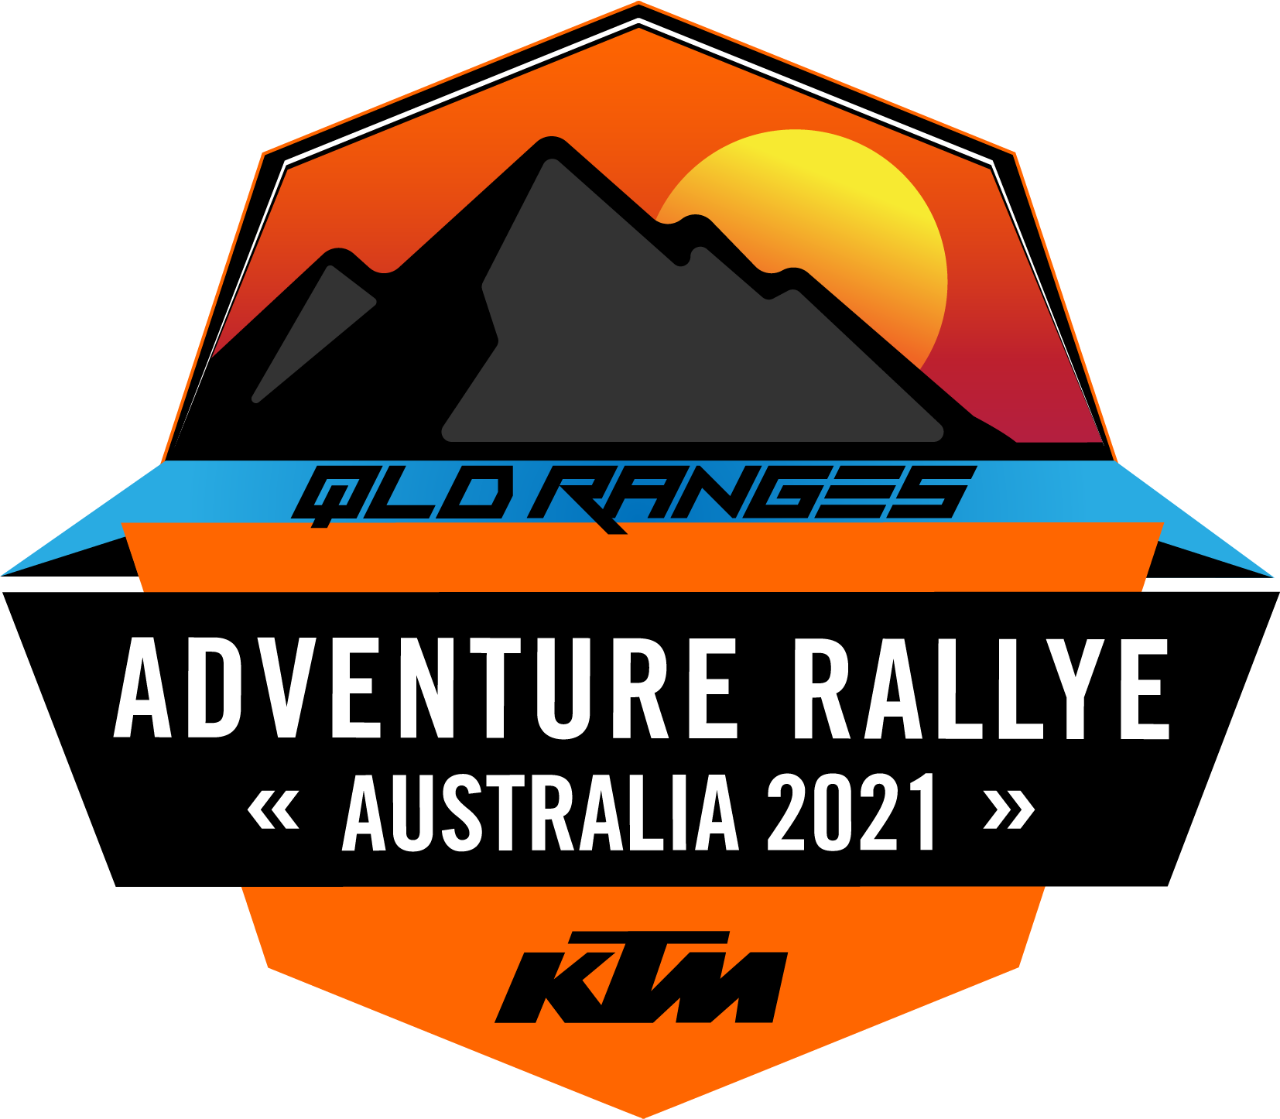 2021 KTM Australia Adventure Rallye: QLD RANGES